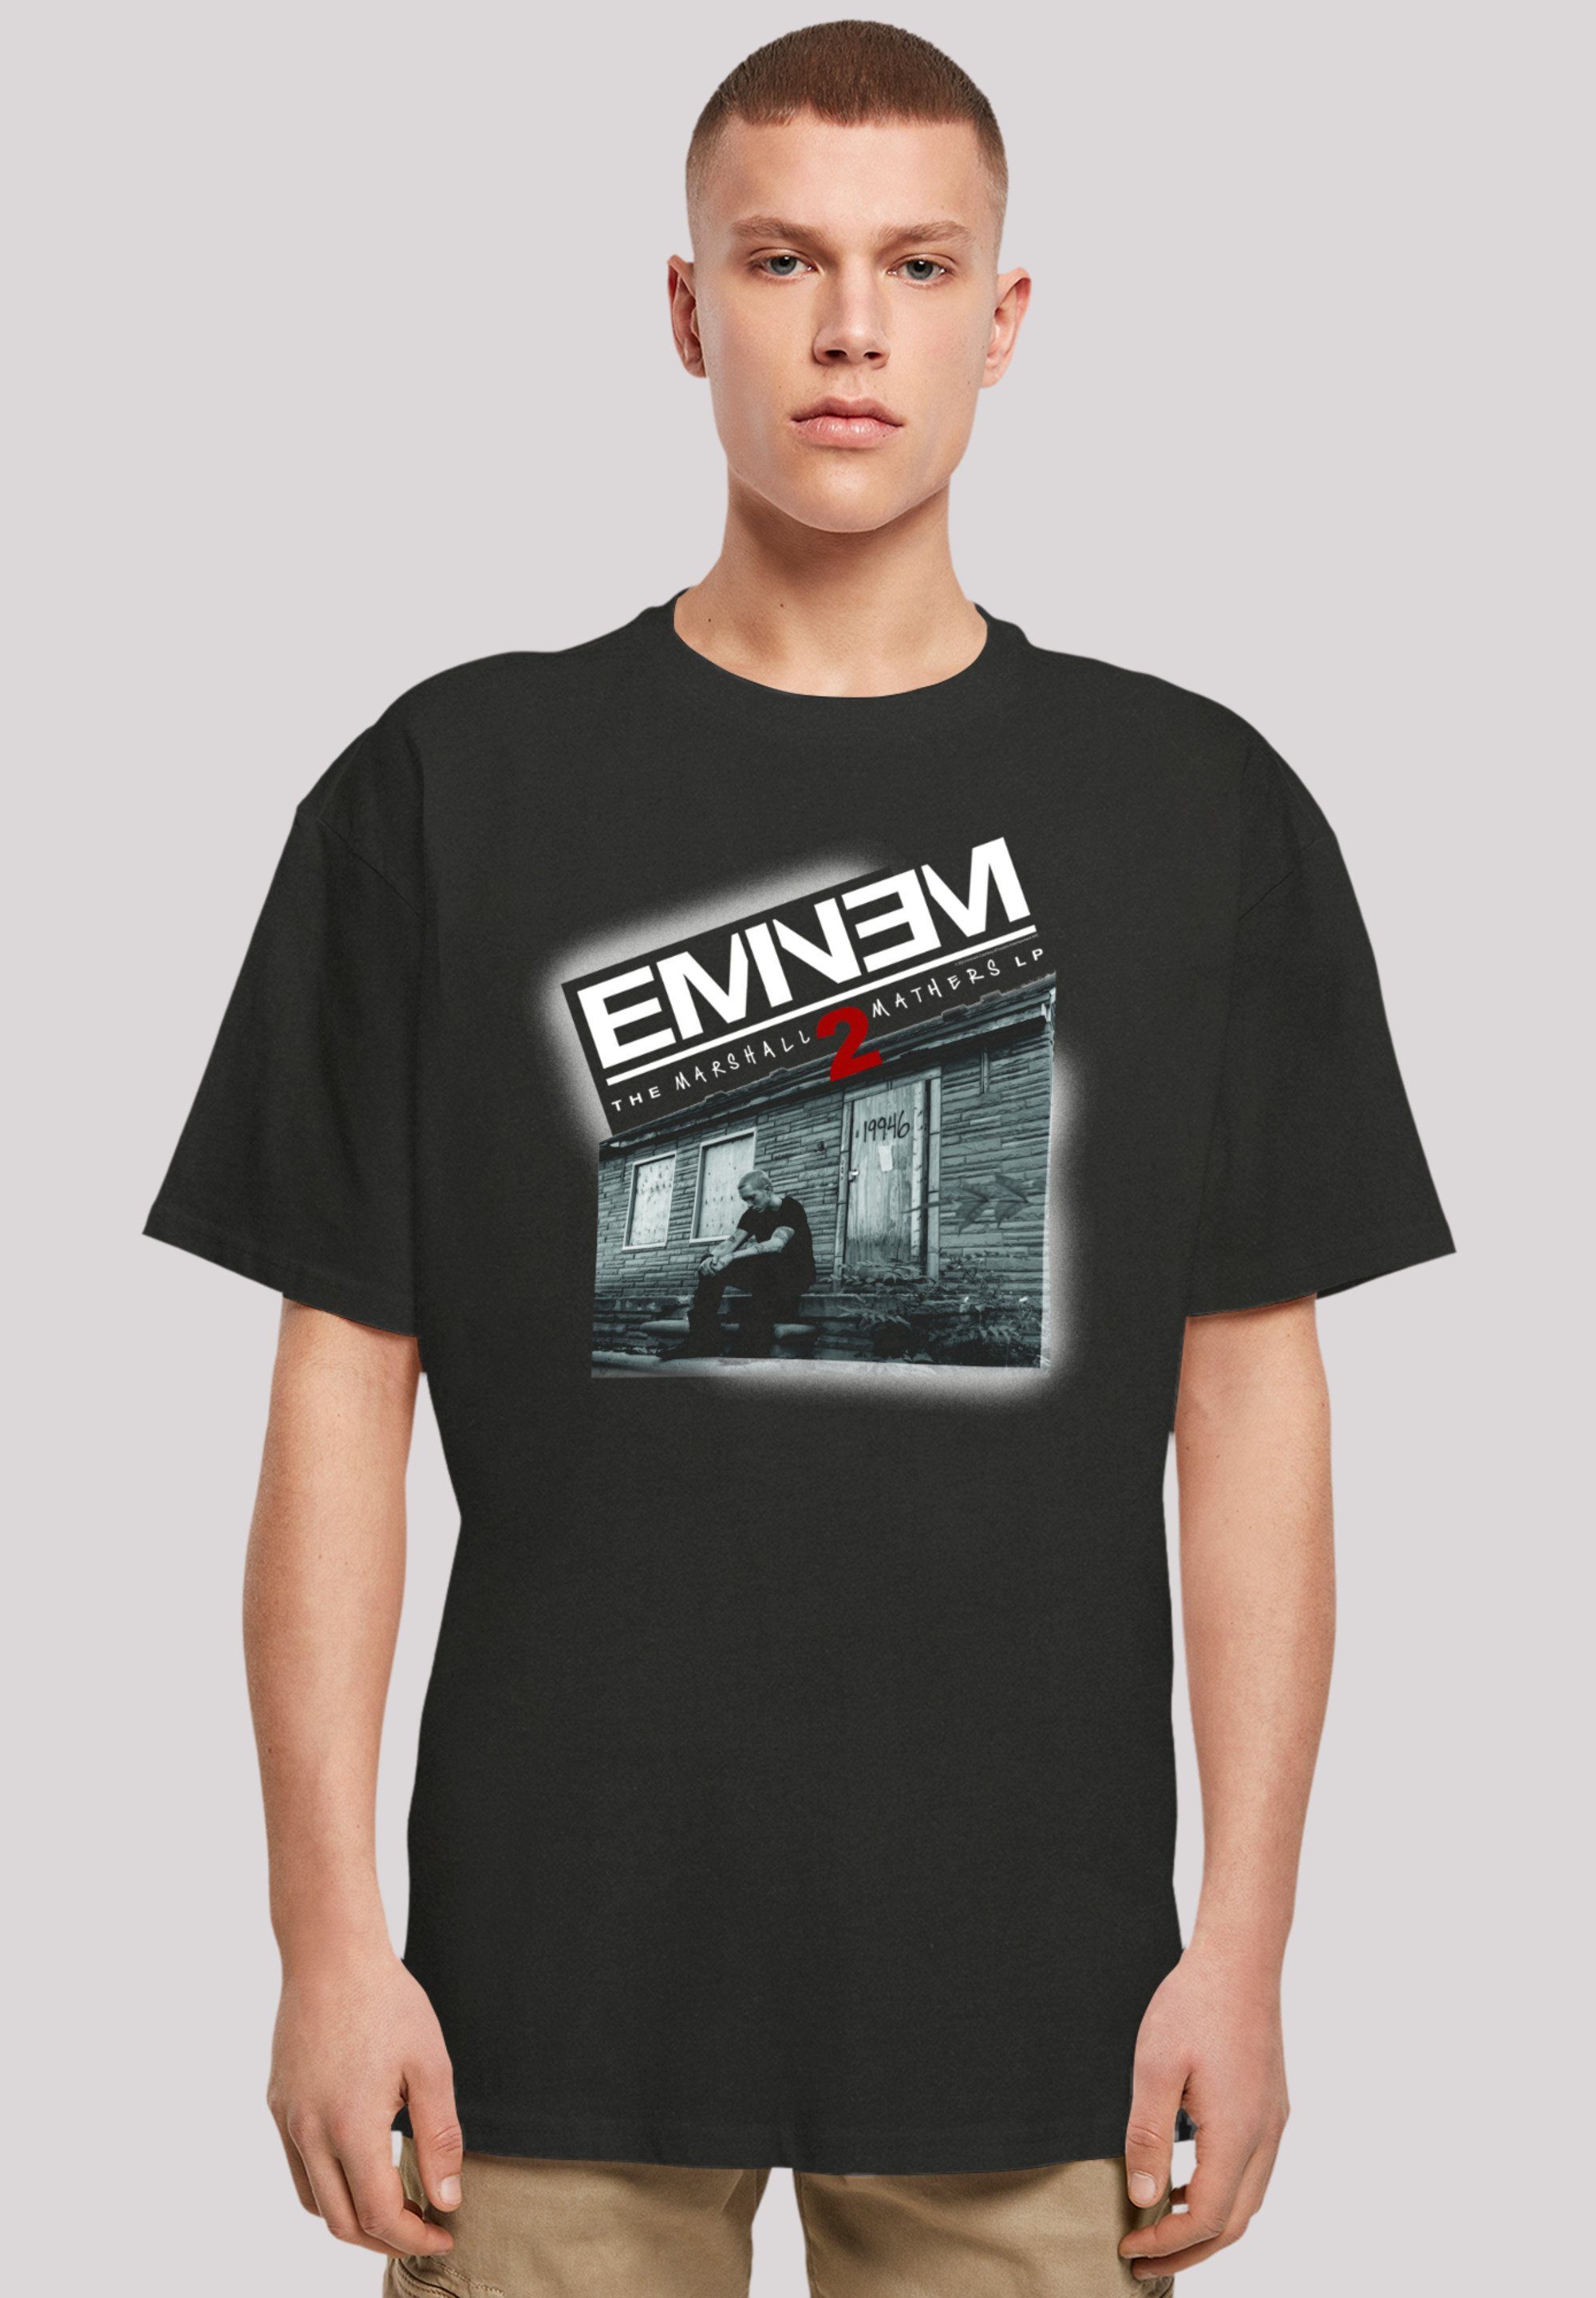 Mathers Rap Marshall Music Eminem schwarz Oldschool Premium Qualität, T-Shirt Musik F4NT4STIC 2